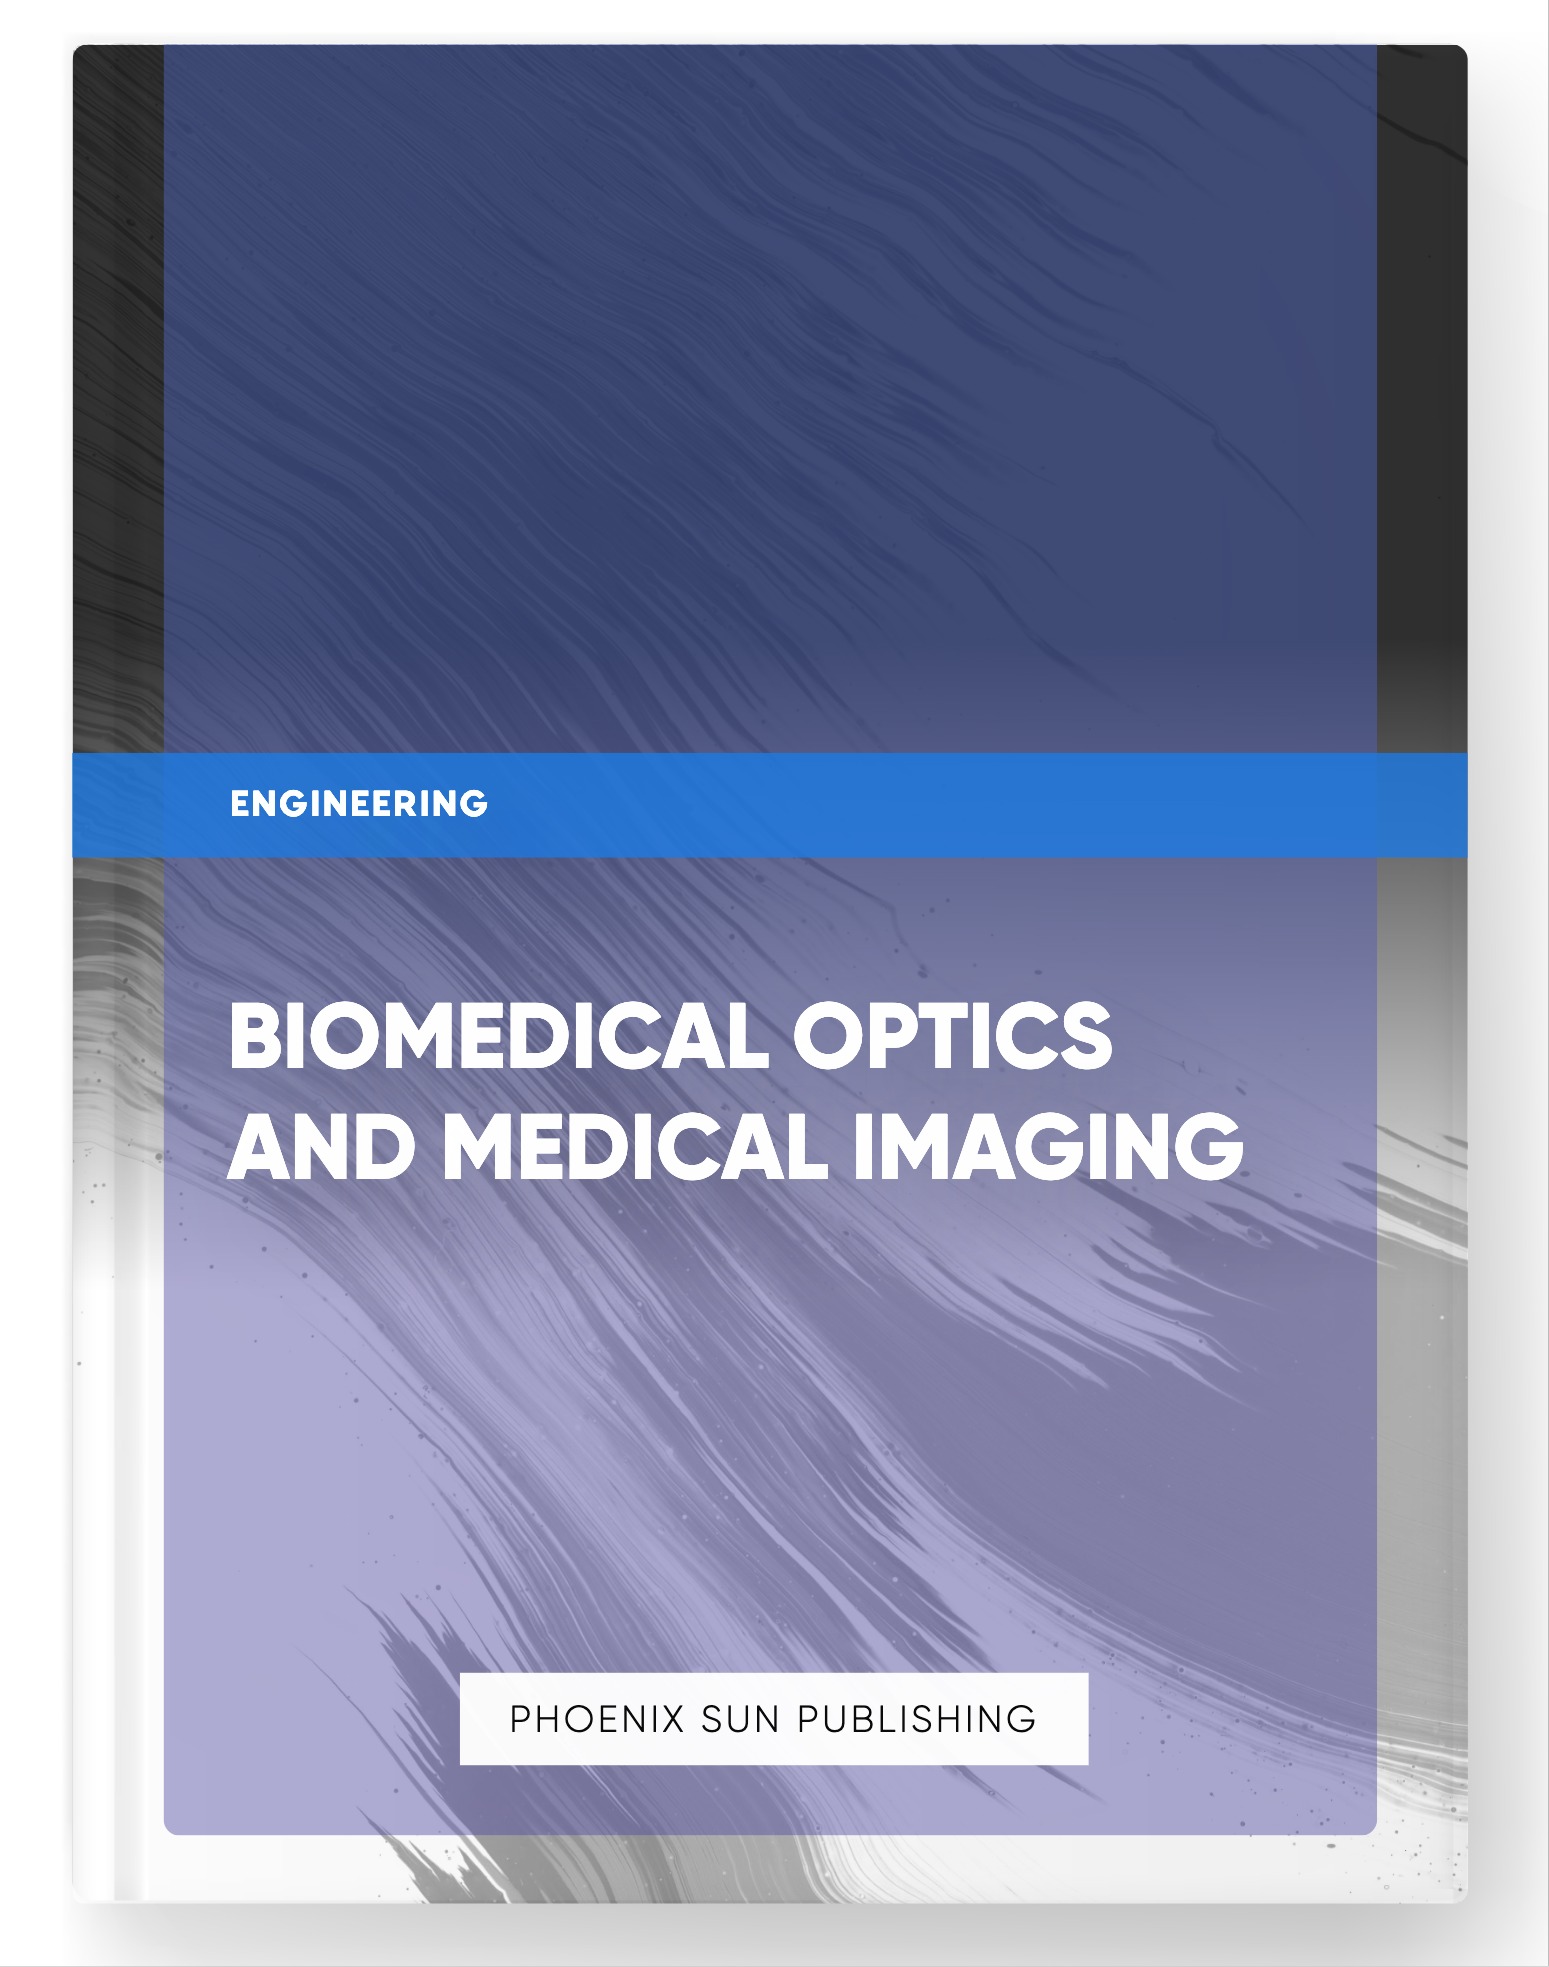 Biomedical Optics and Medical Imaging